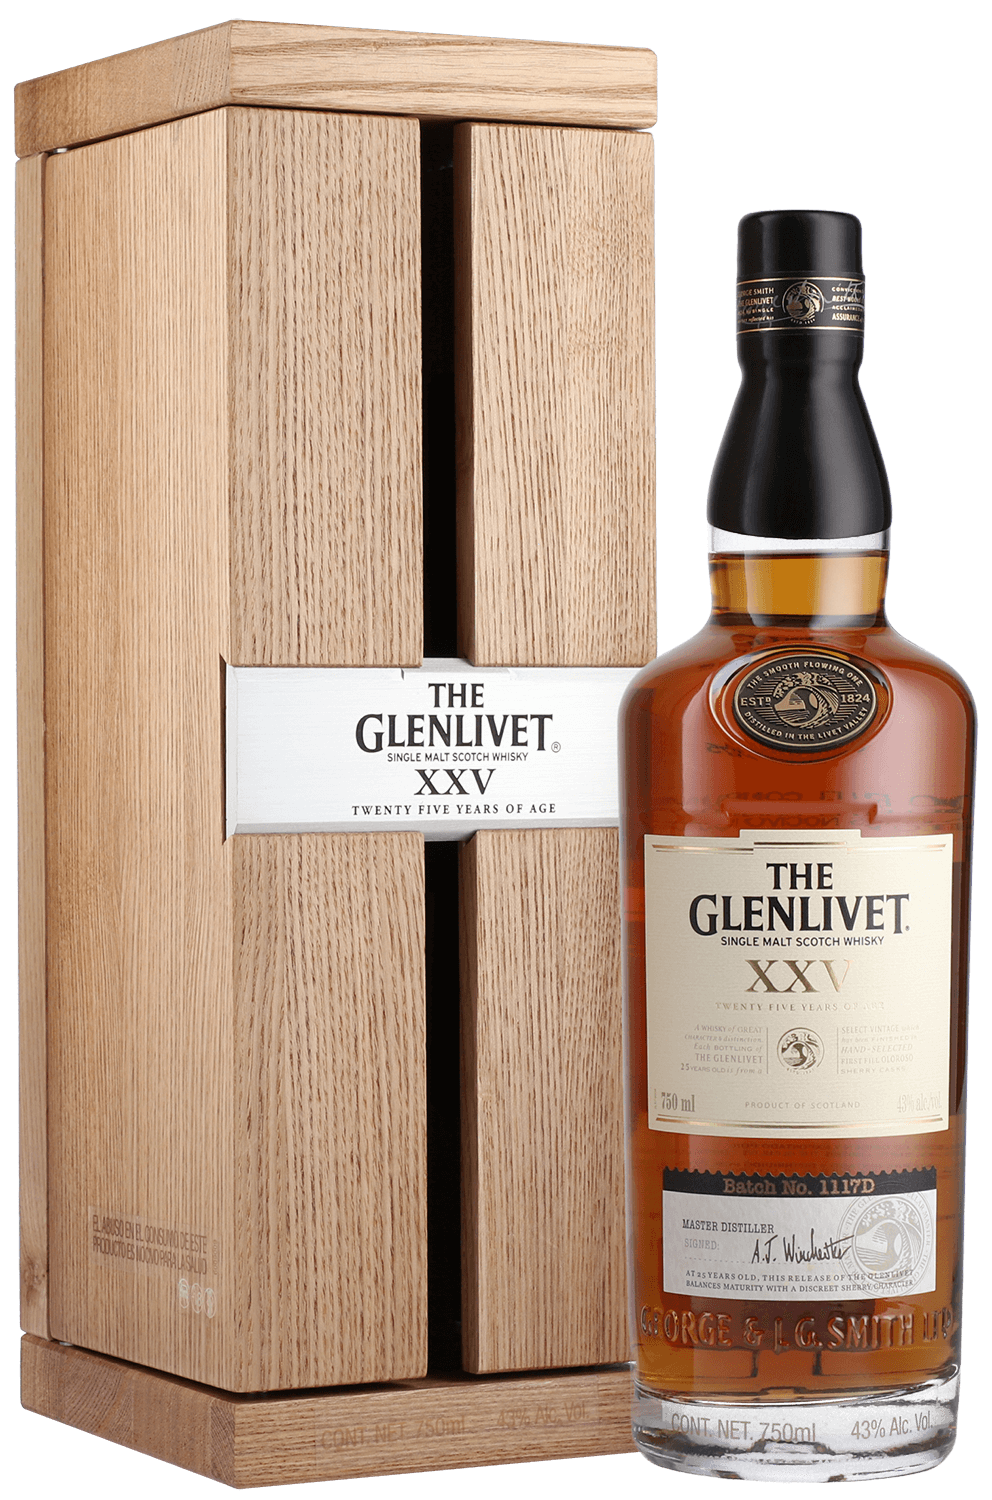 The Glenlivet XXV 25 y.o. single malt scotch whisky (gift box) the glenlivet founder s reserve single malt scotch whisky gift box with 2 glasses